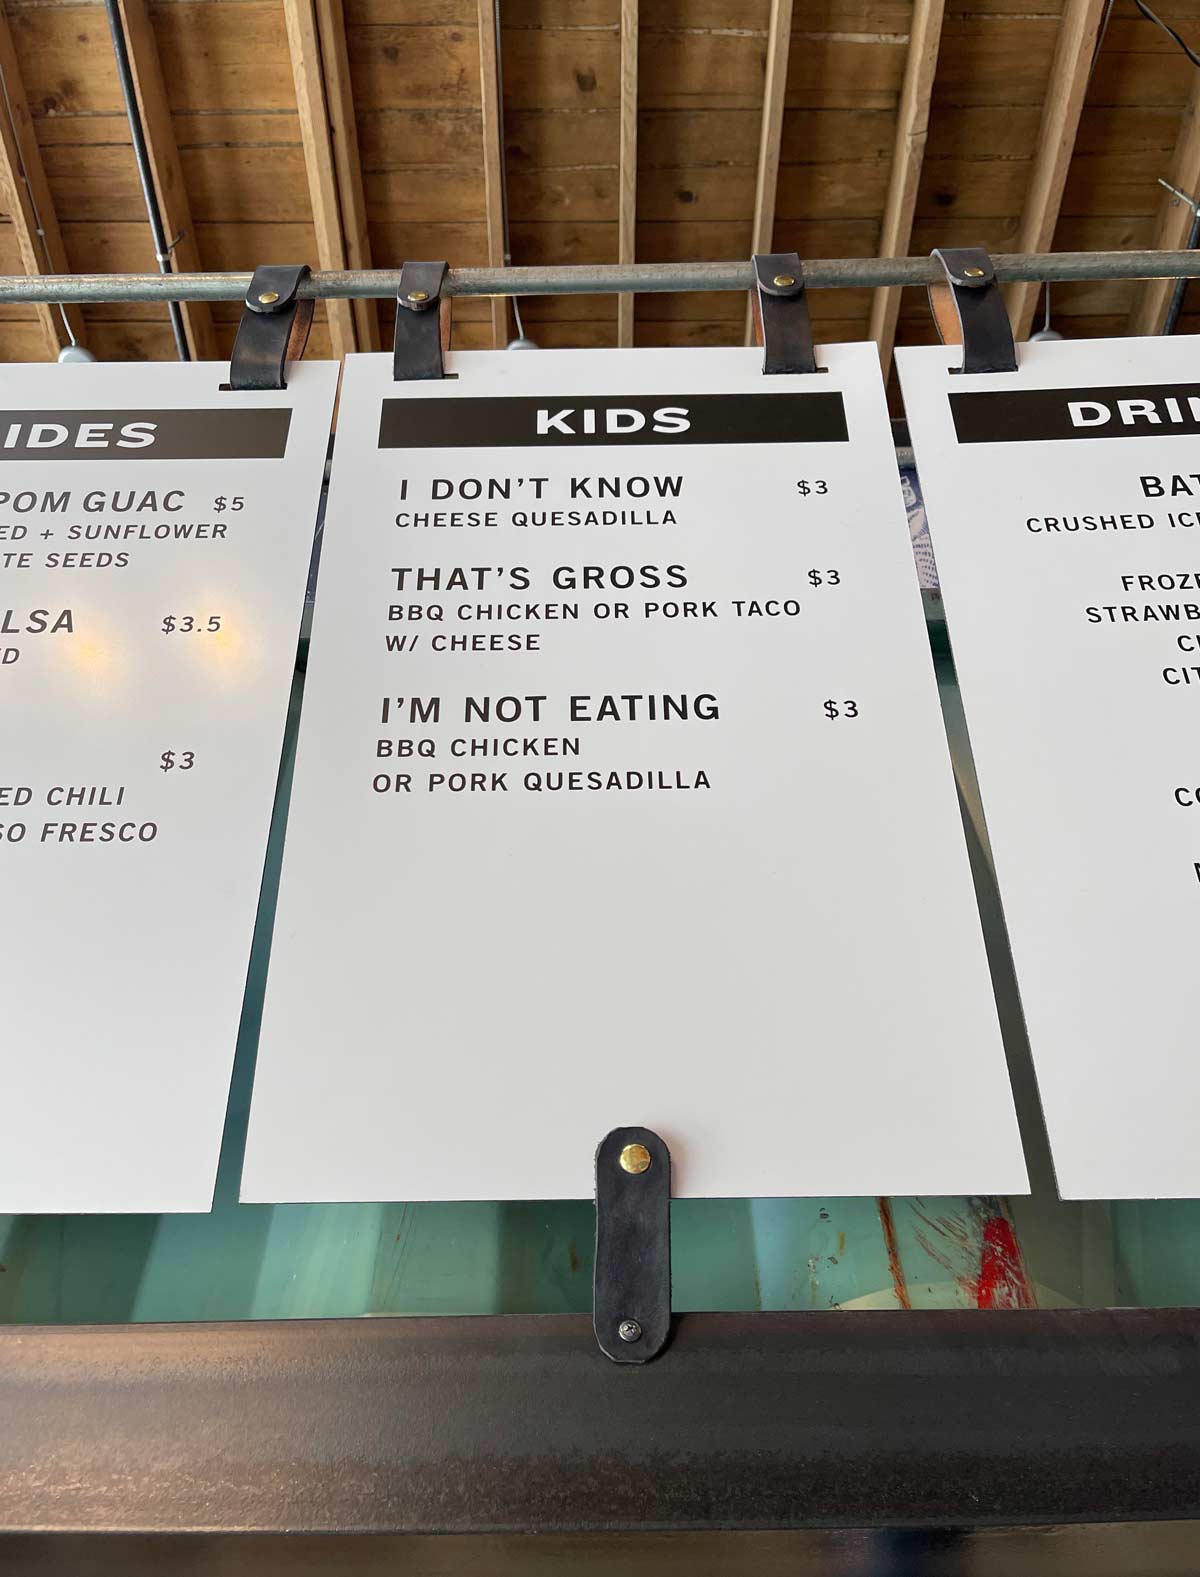 The Kids menu at this restaurant